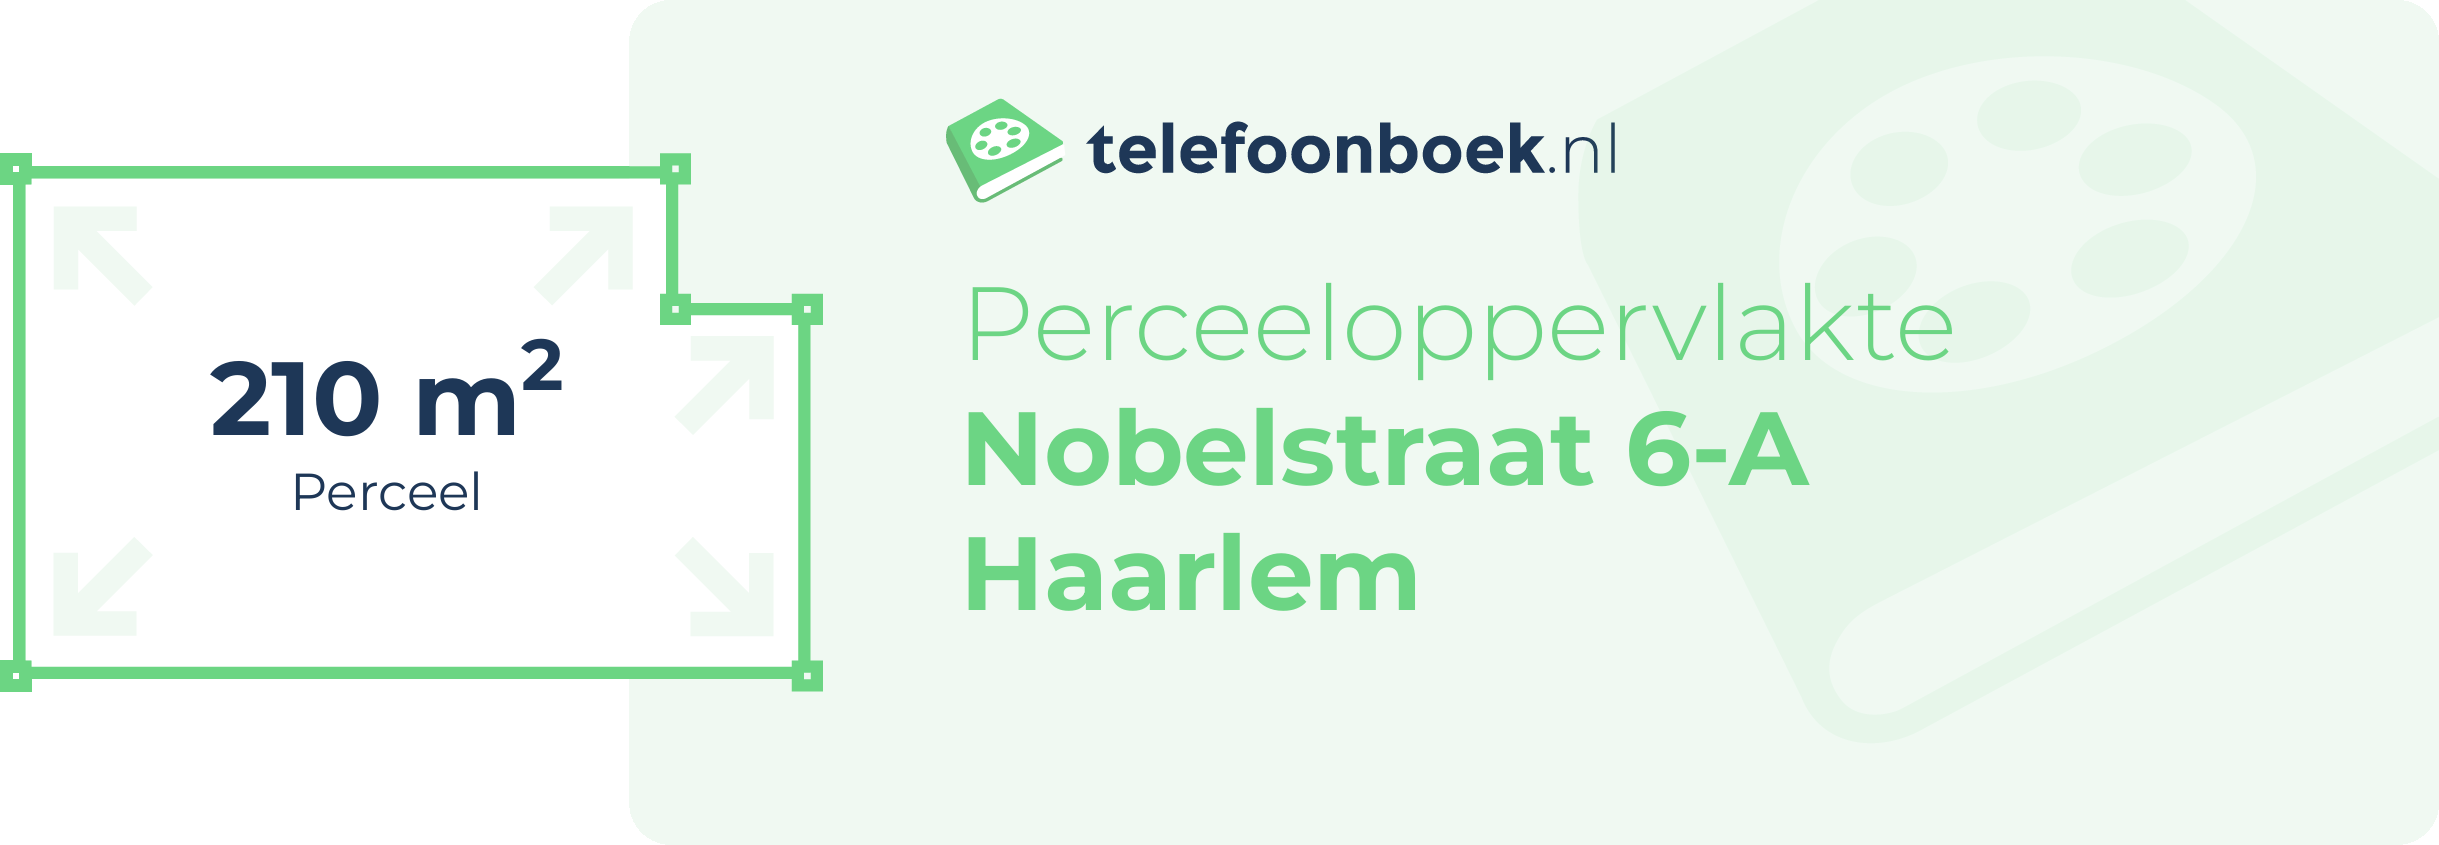 Perceeloppervlakte Nobelstraat 6-A Haarlem